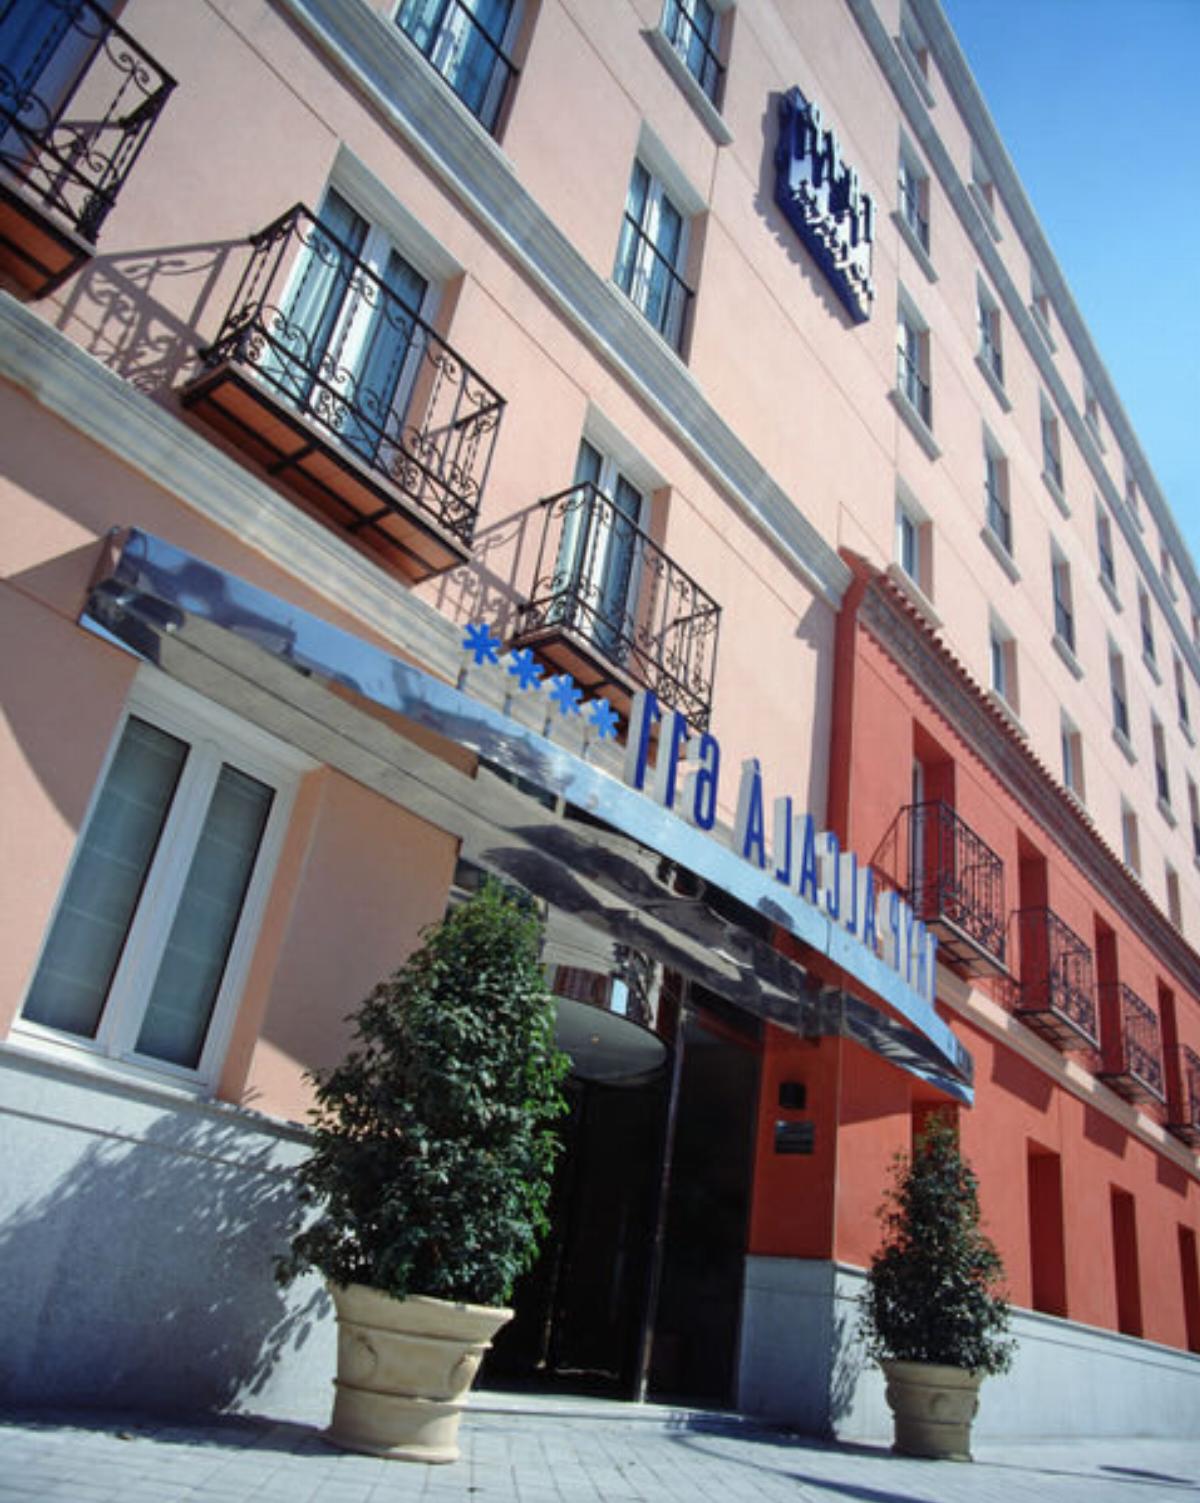 Sercotel Alcalá 611 Hotel Madrid Spain